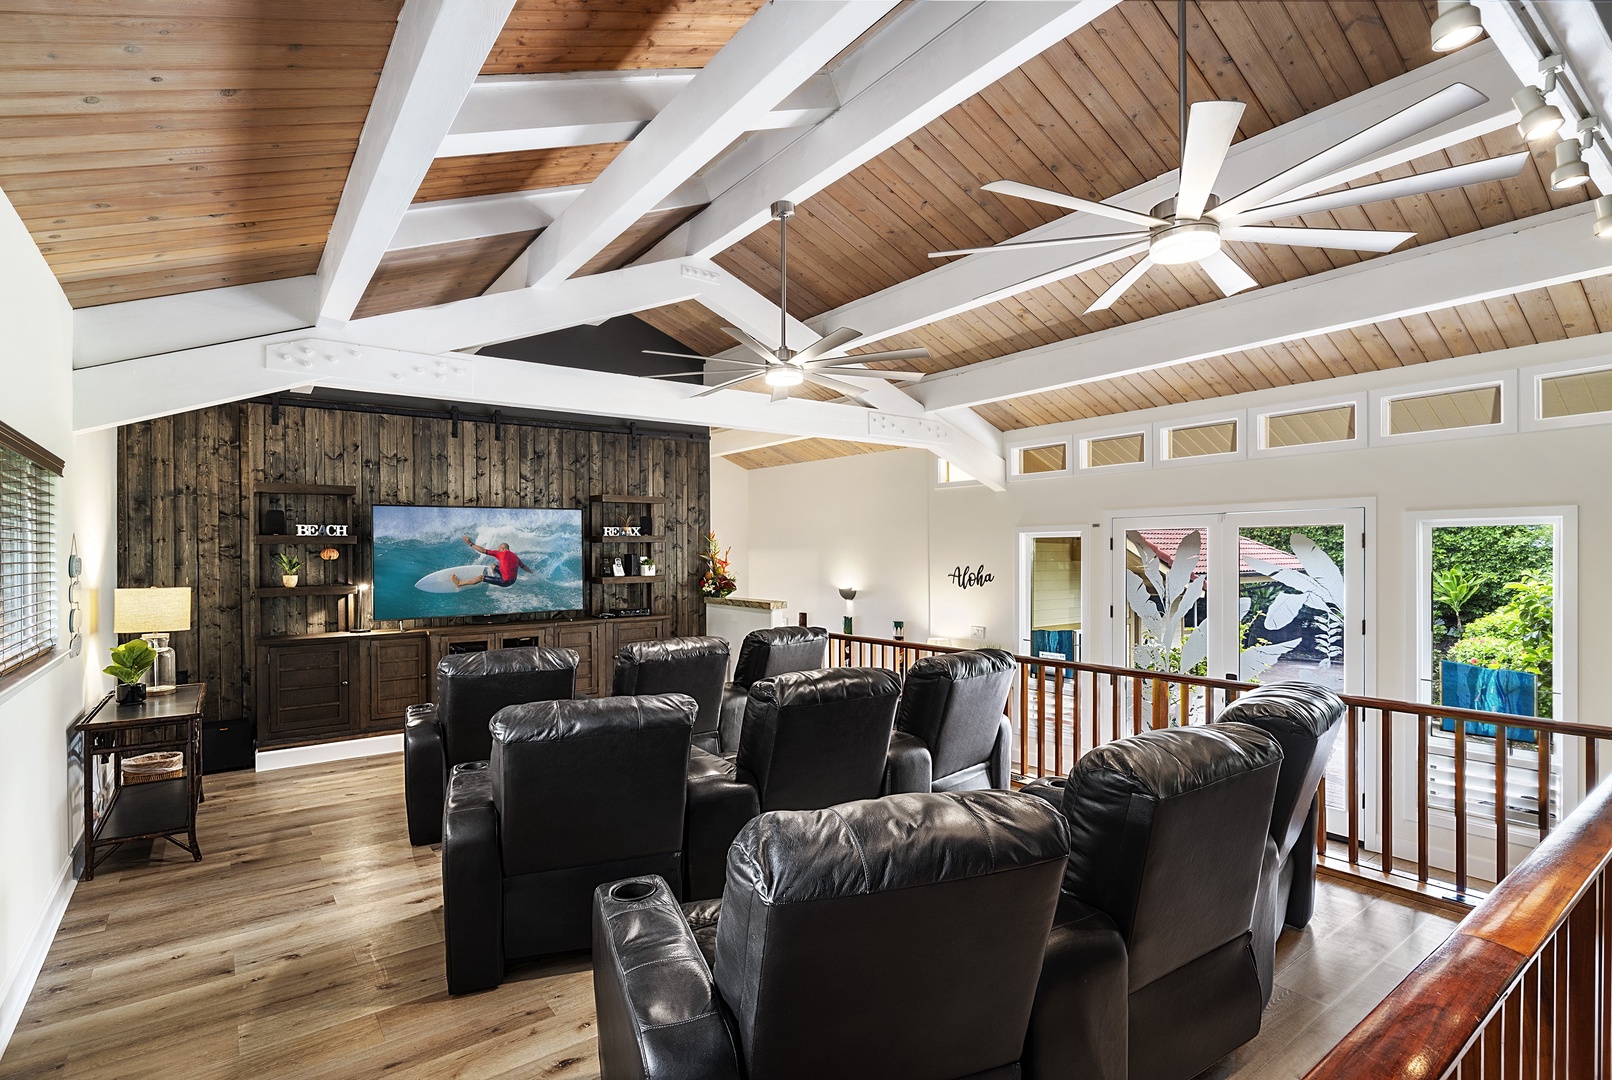 Kailua Kona Vacation Rentals, Hale Pua - Entertainment Room for your viewing pleasure!